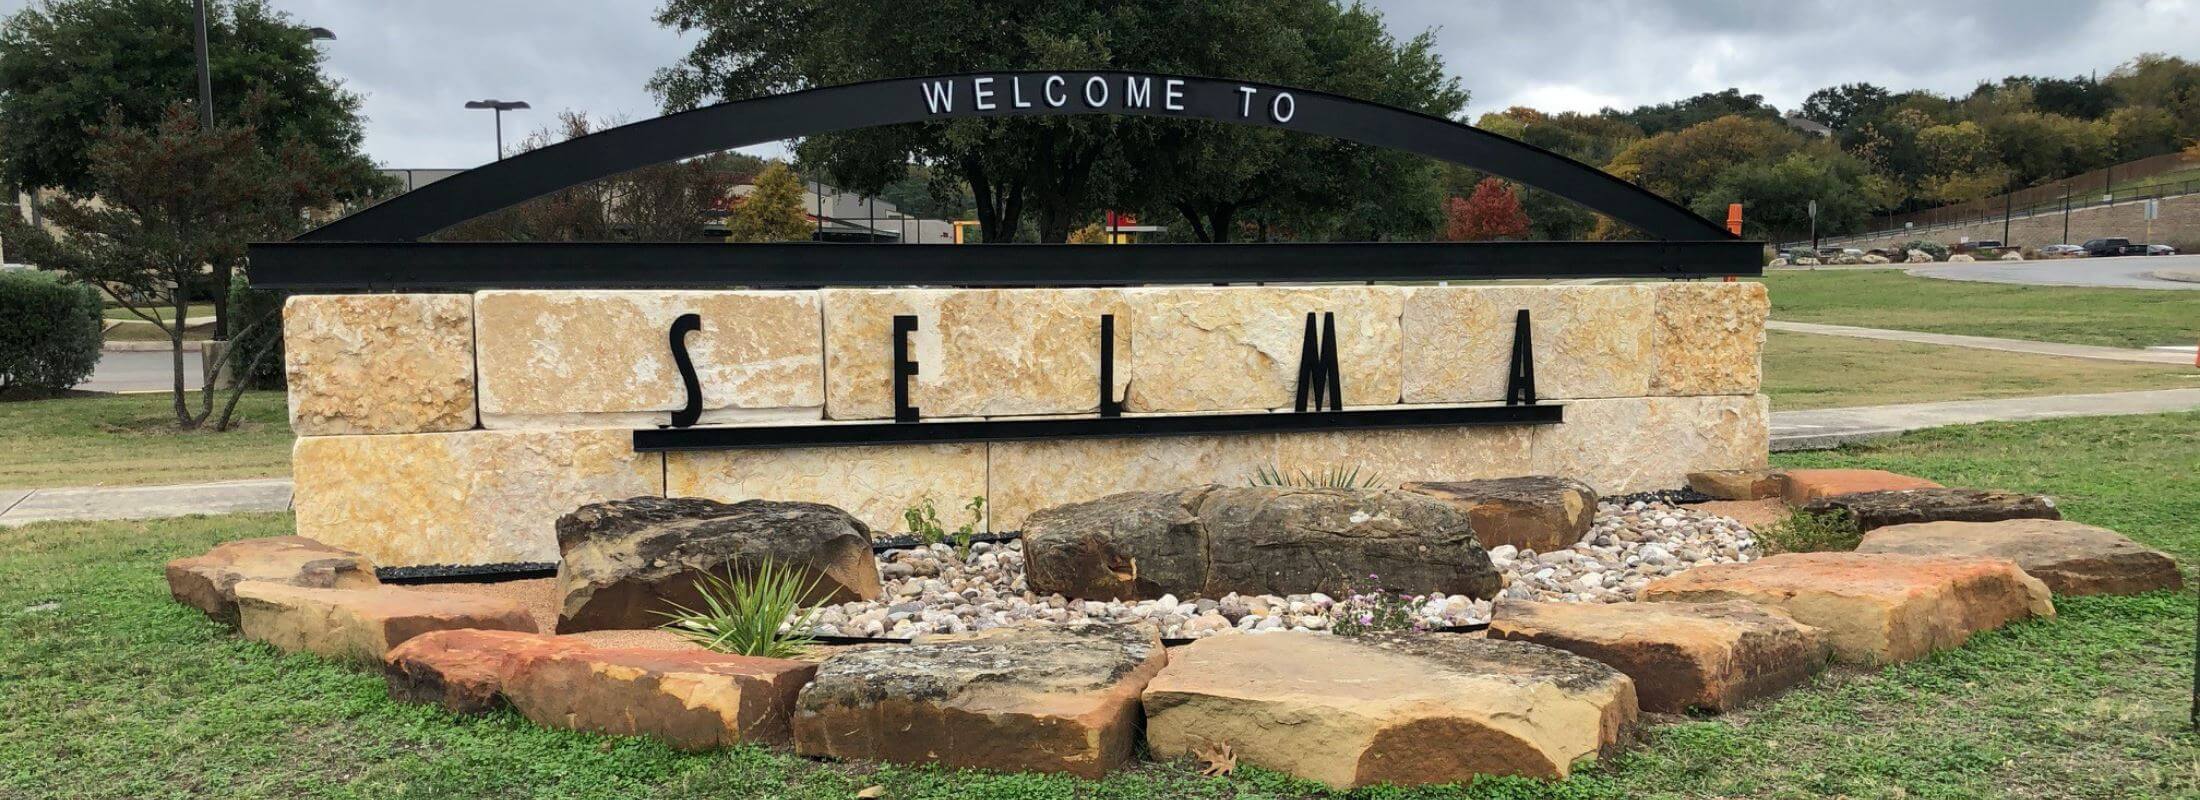 Welcome to Selma